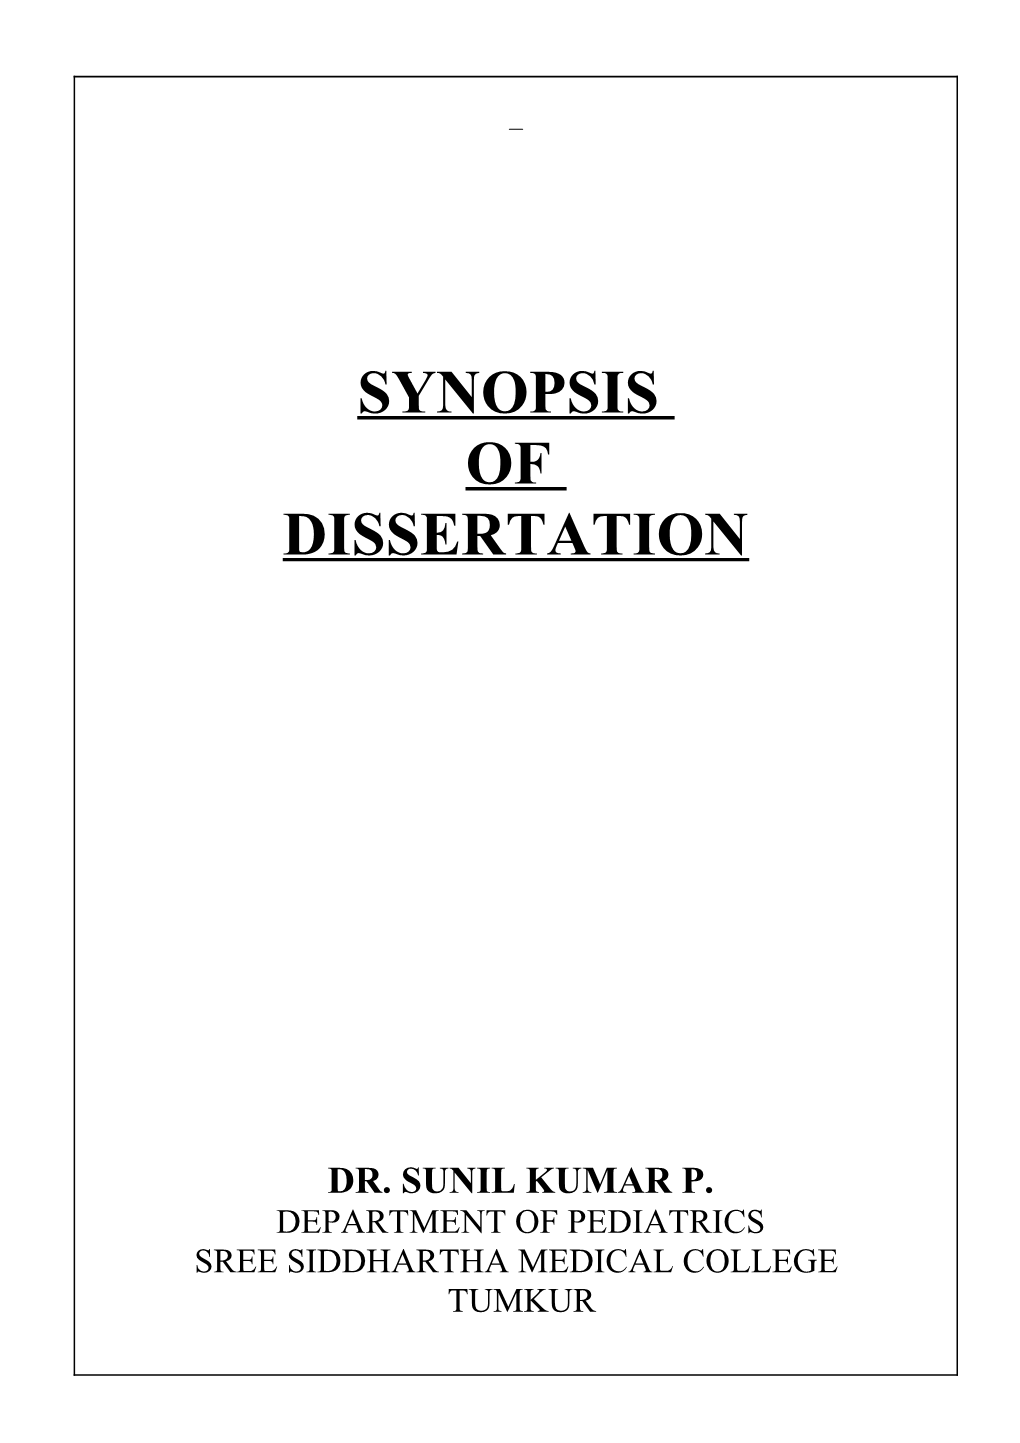 Dr. Sunil Kumar P